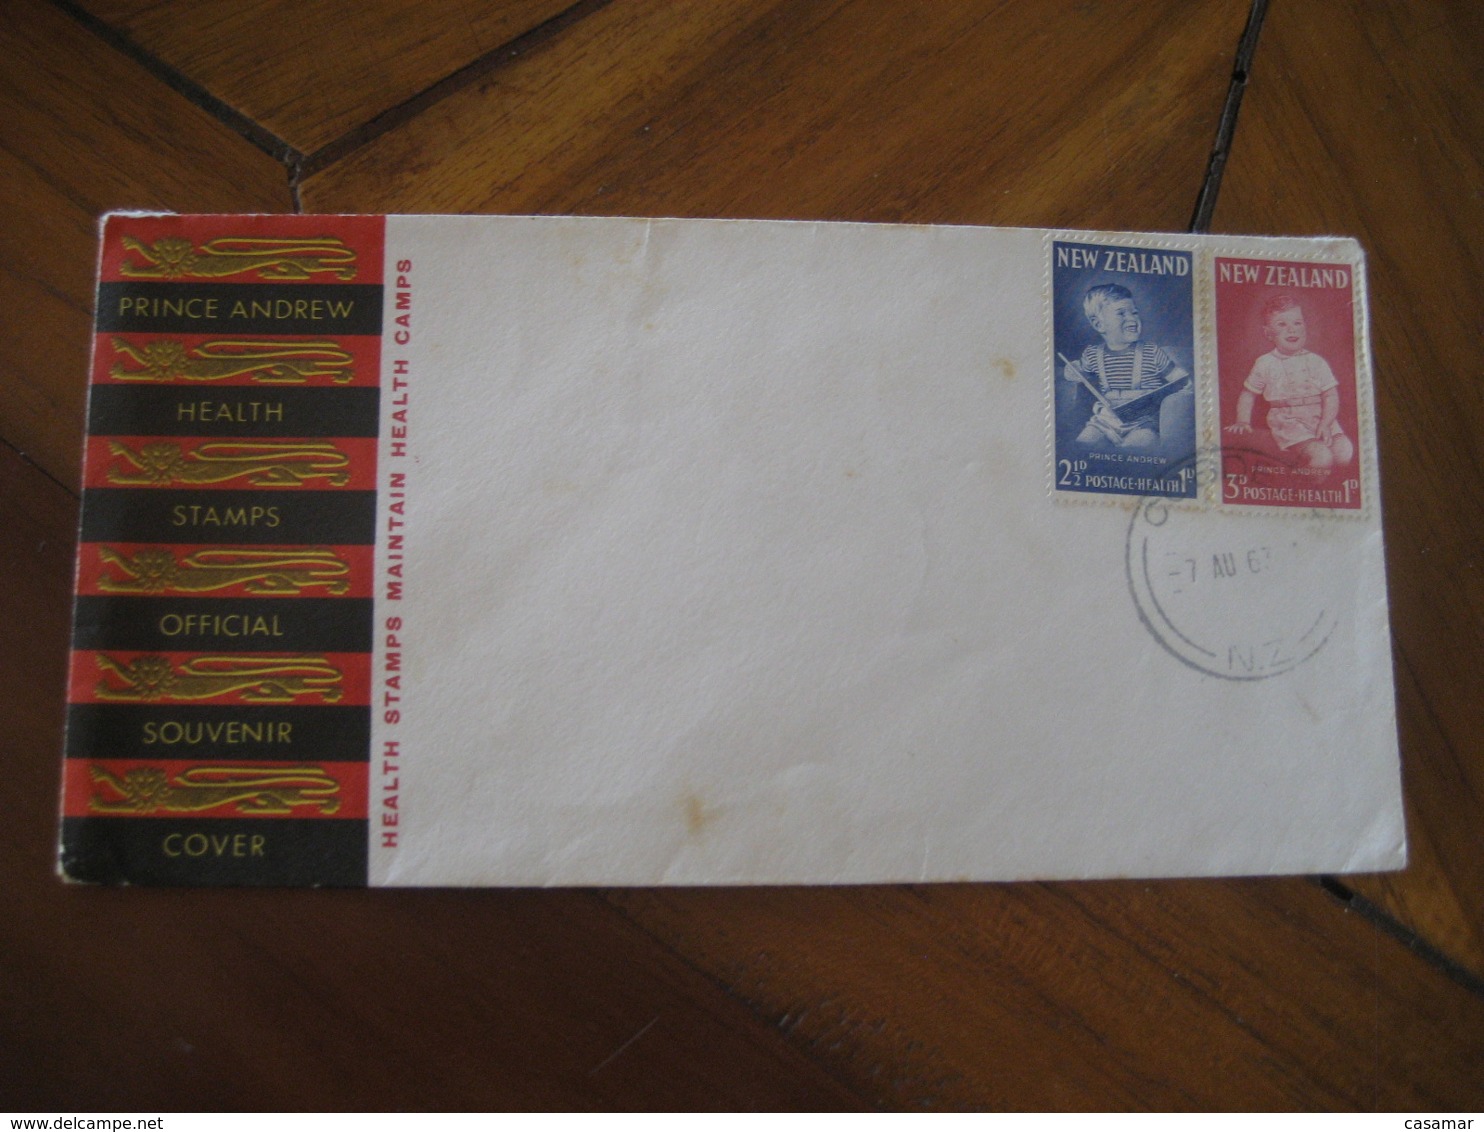 Prince Andrew 1963 Health Stamps Official Souvenir Cancel Cover NEW ZEALAND - Briefe U. Dokumente